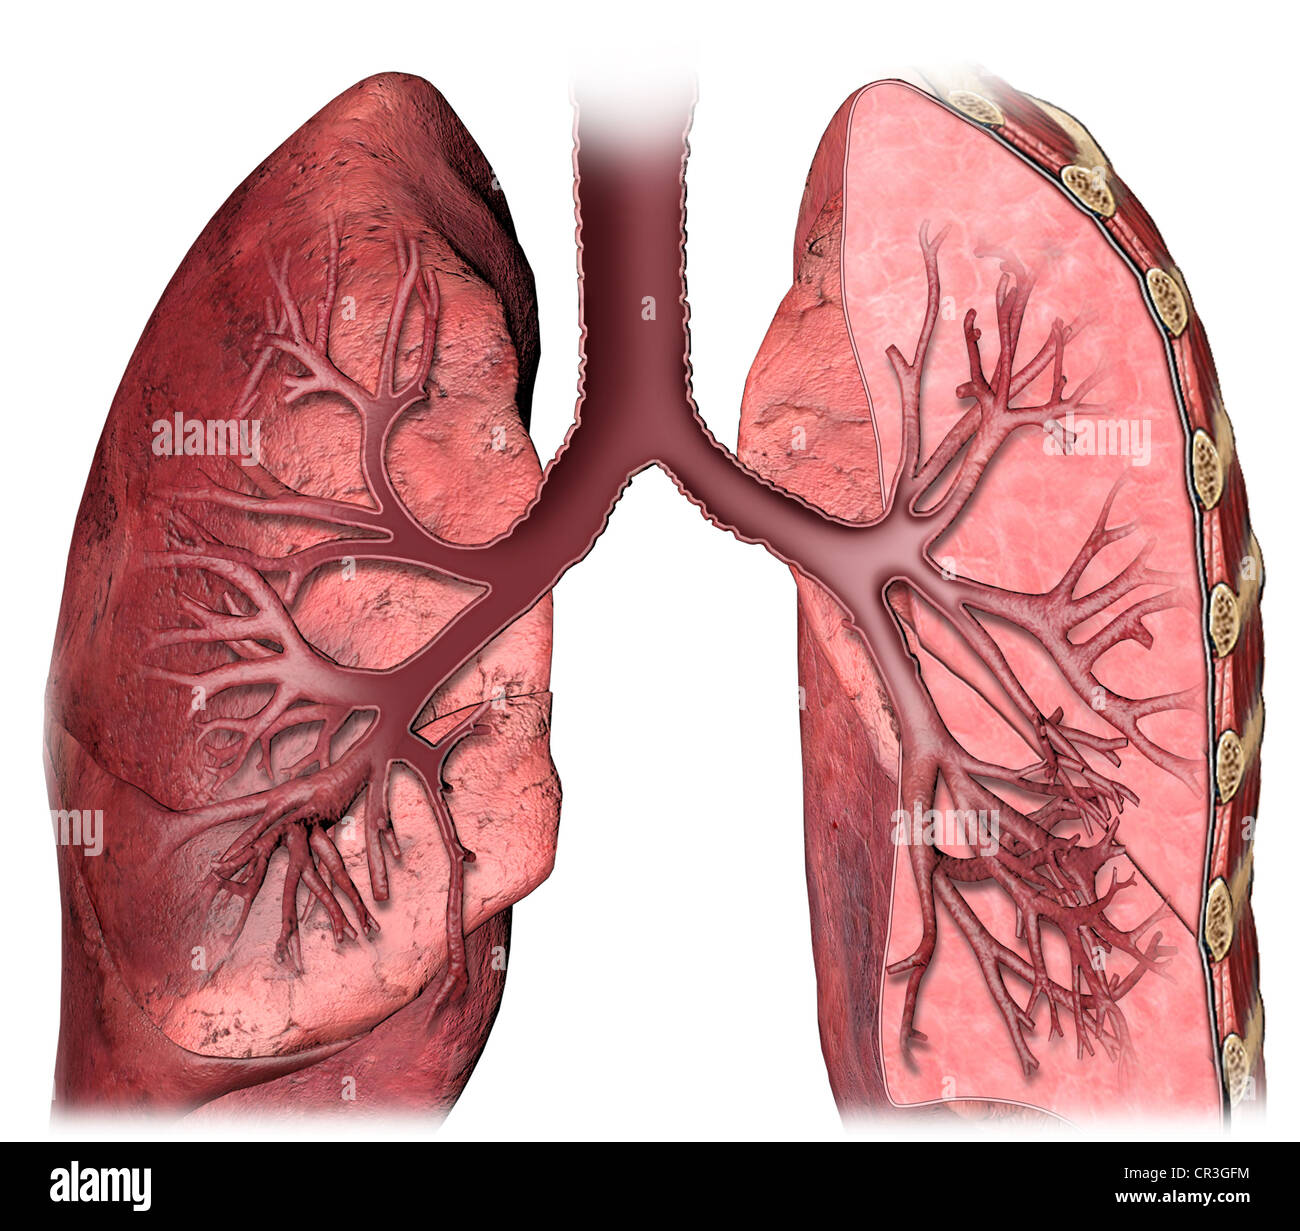 hilum of lung